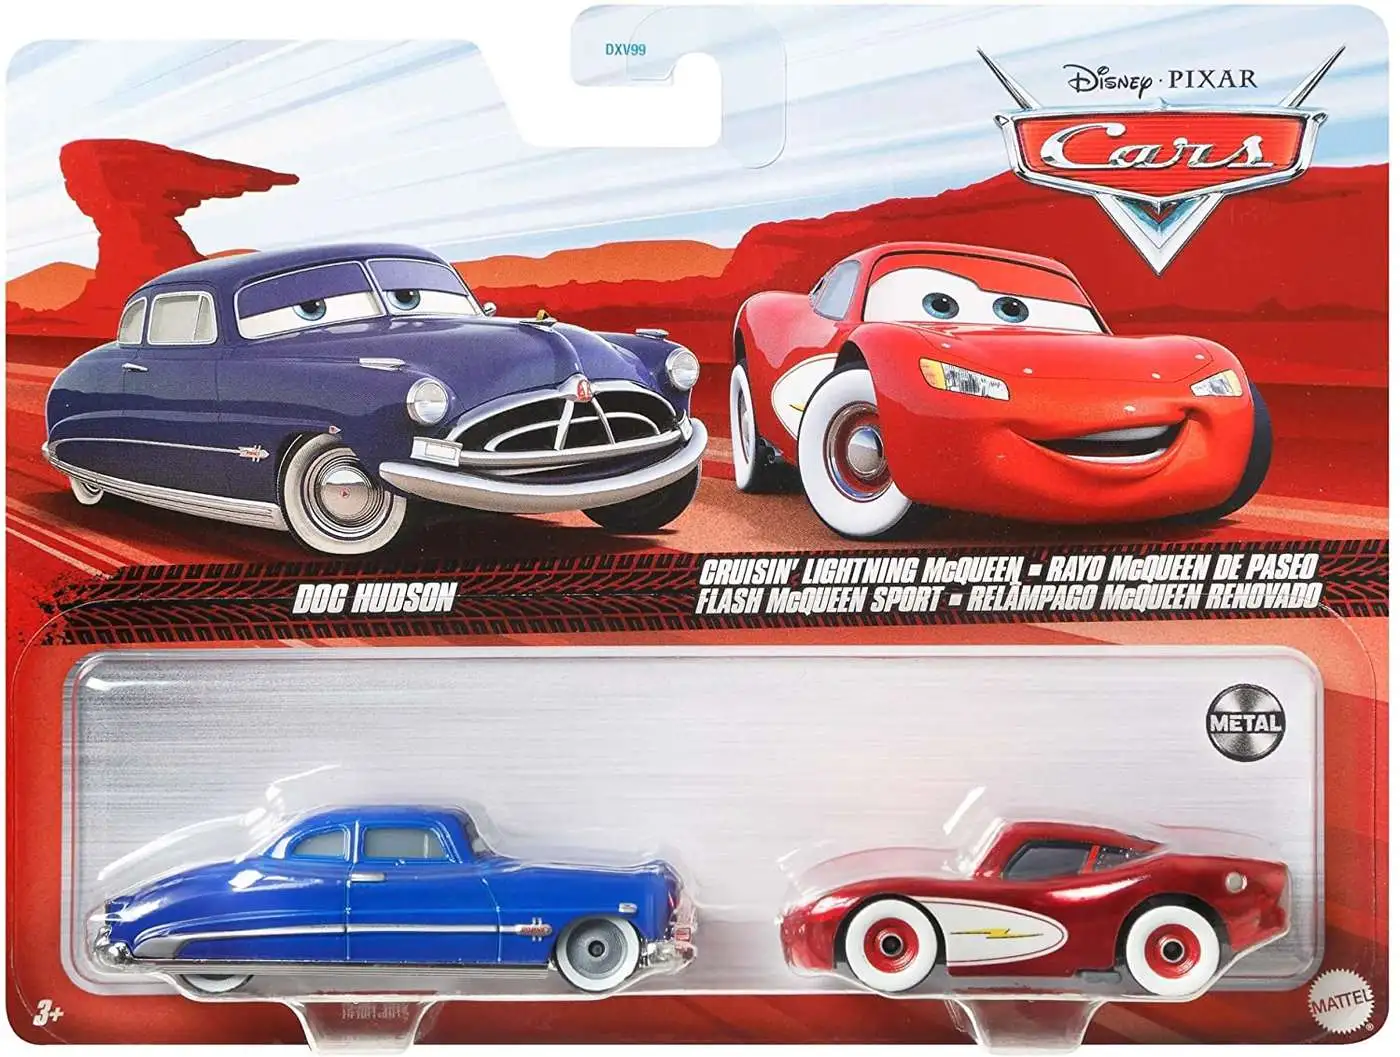 Disney / Pixar Cars Cars 3 Metal Doc Hudson & Cruisin' Lightning McQueen Diecast Car 2-Pack